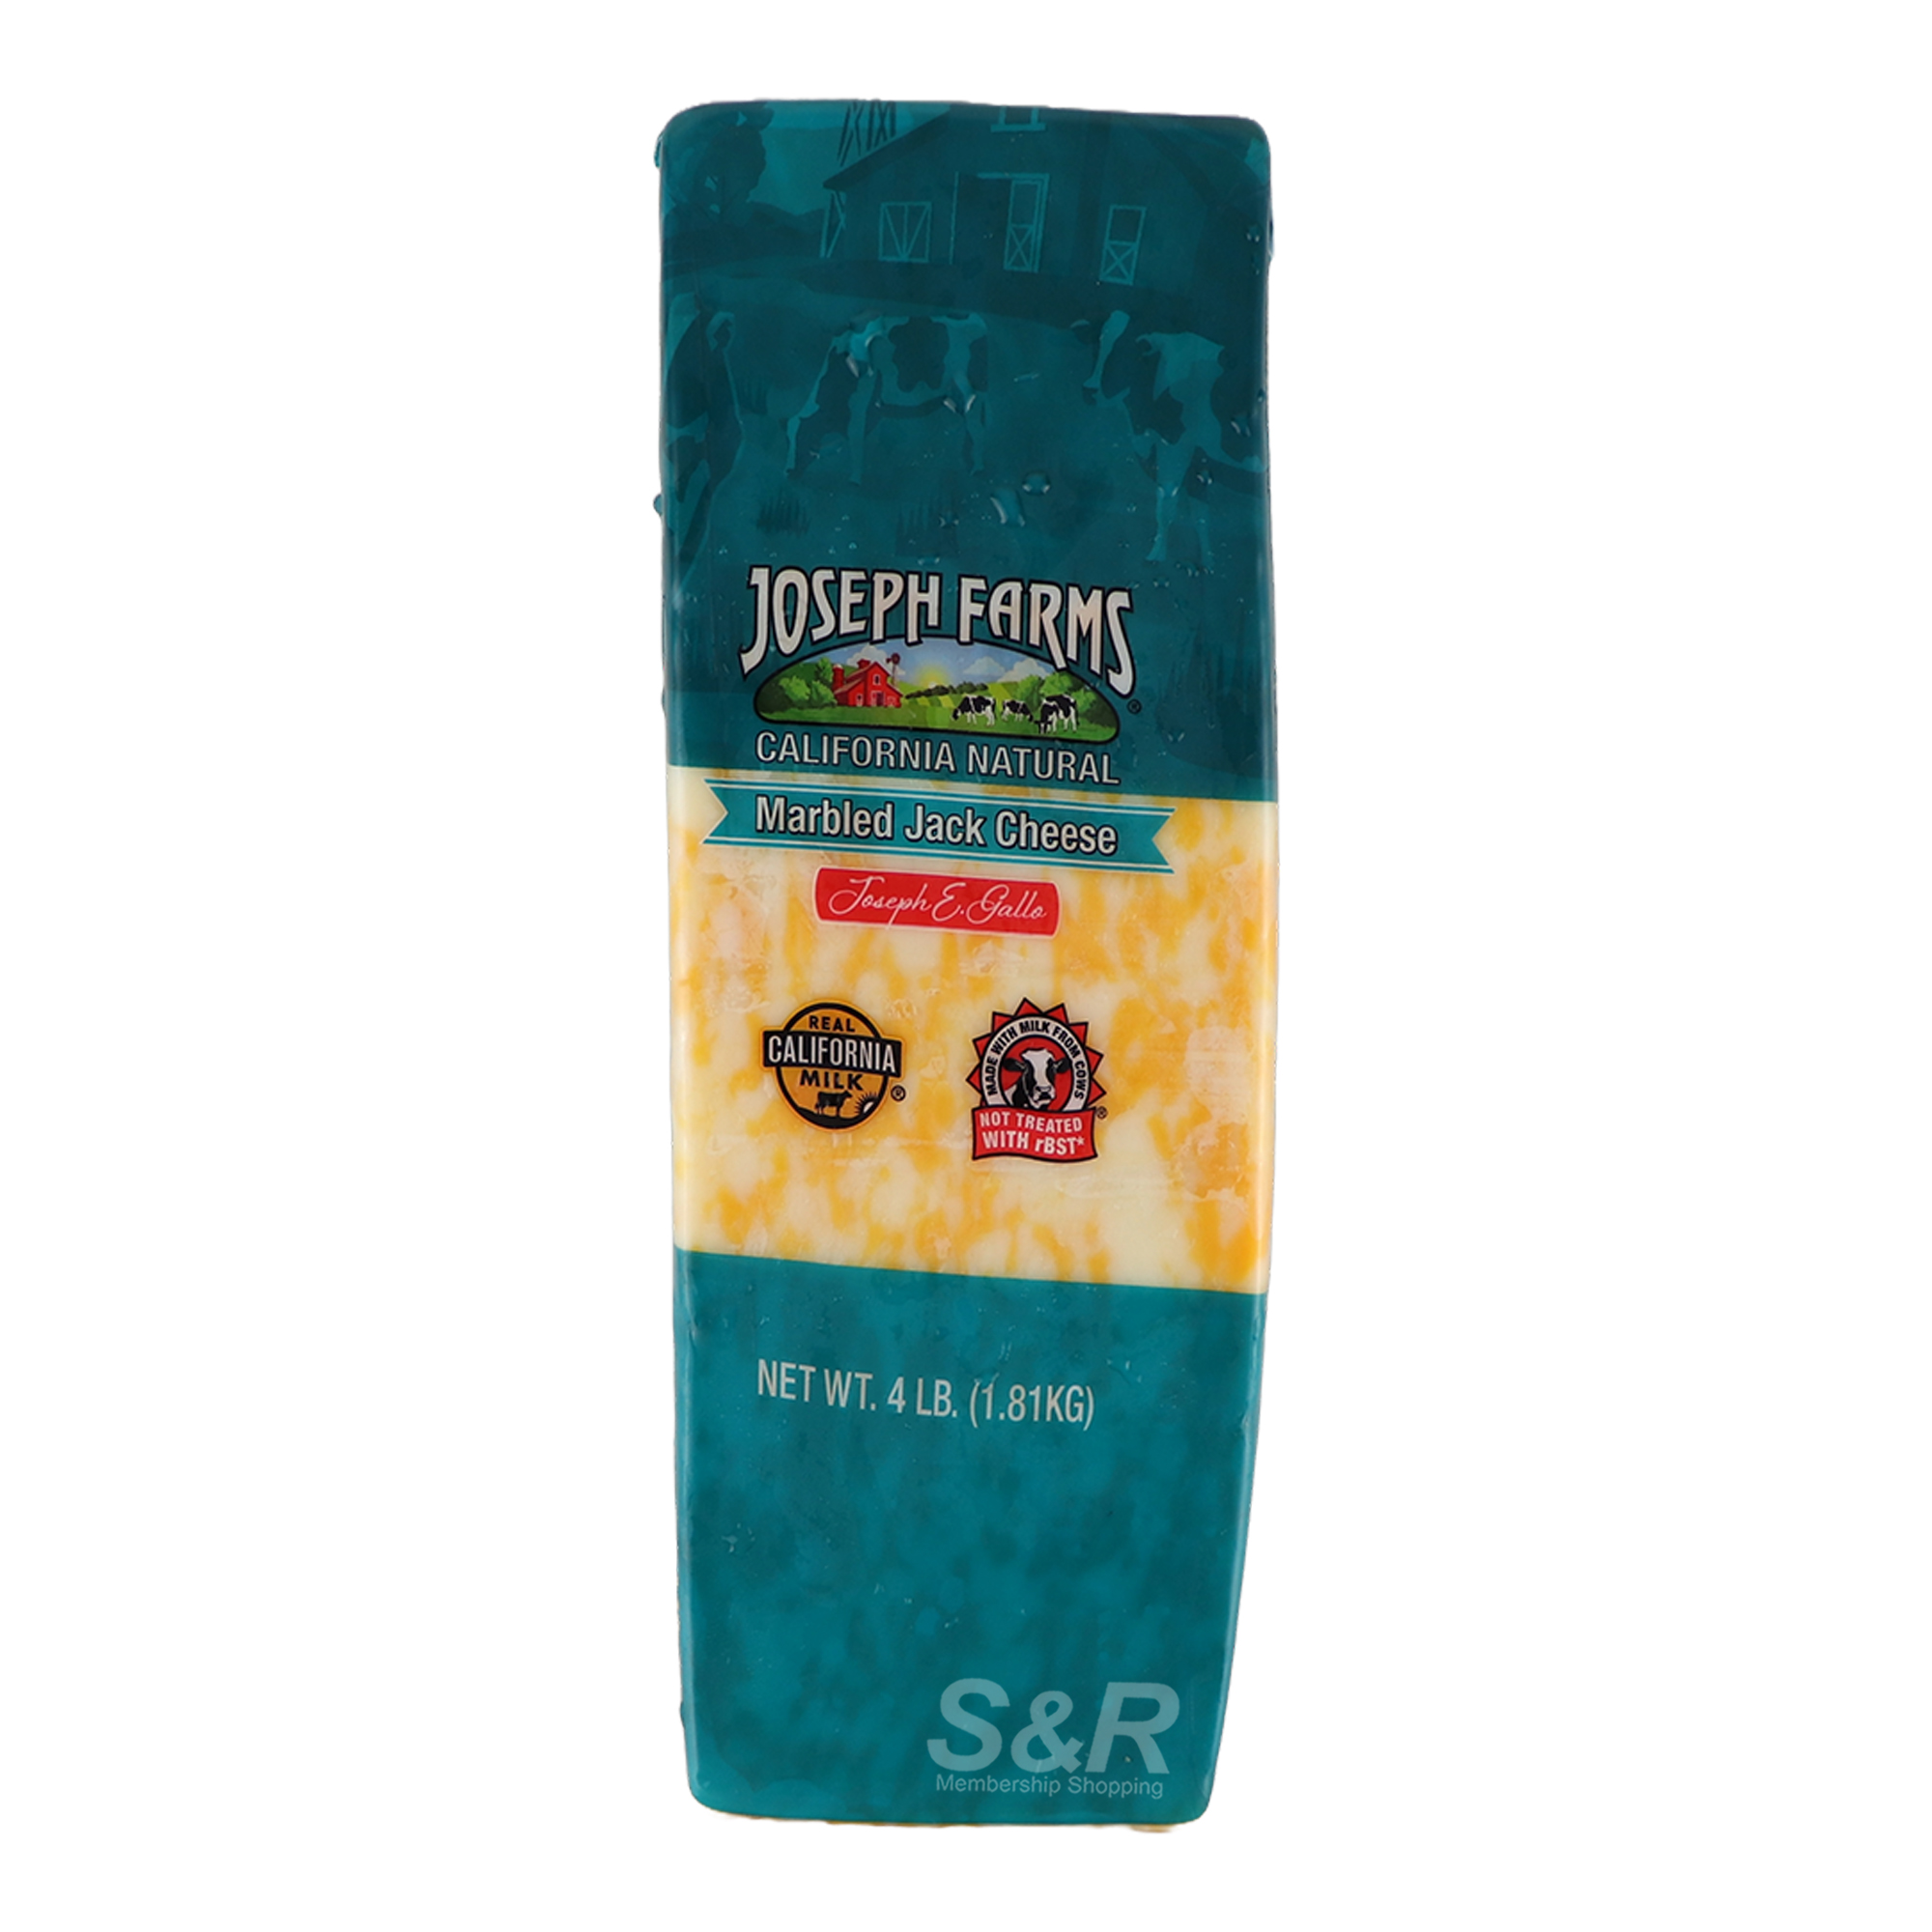 Joseph Farms Marbled Jack Cheese 1.81kg